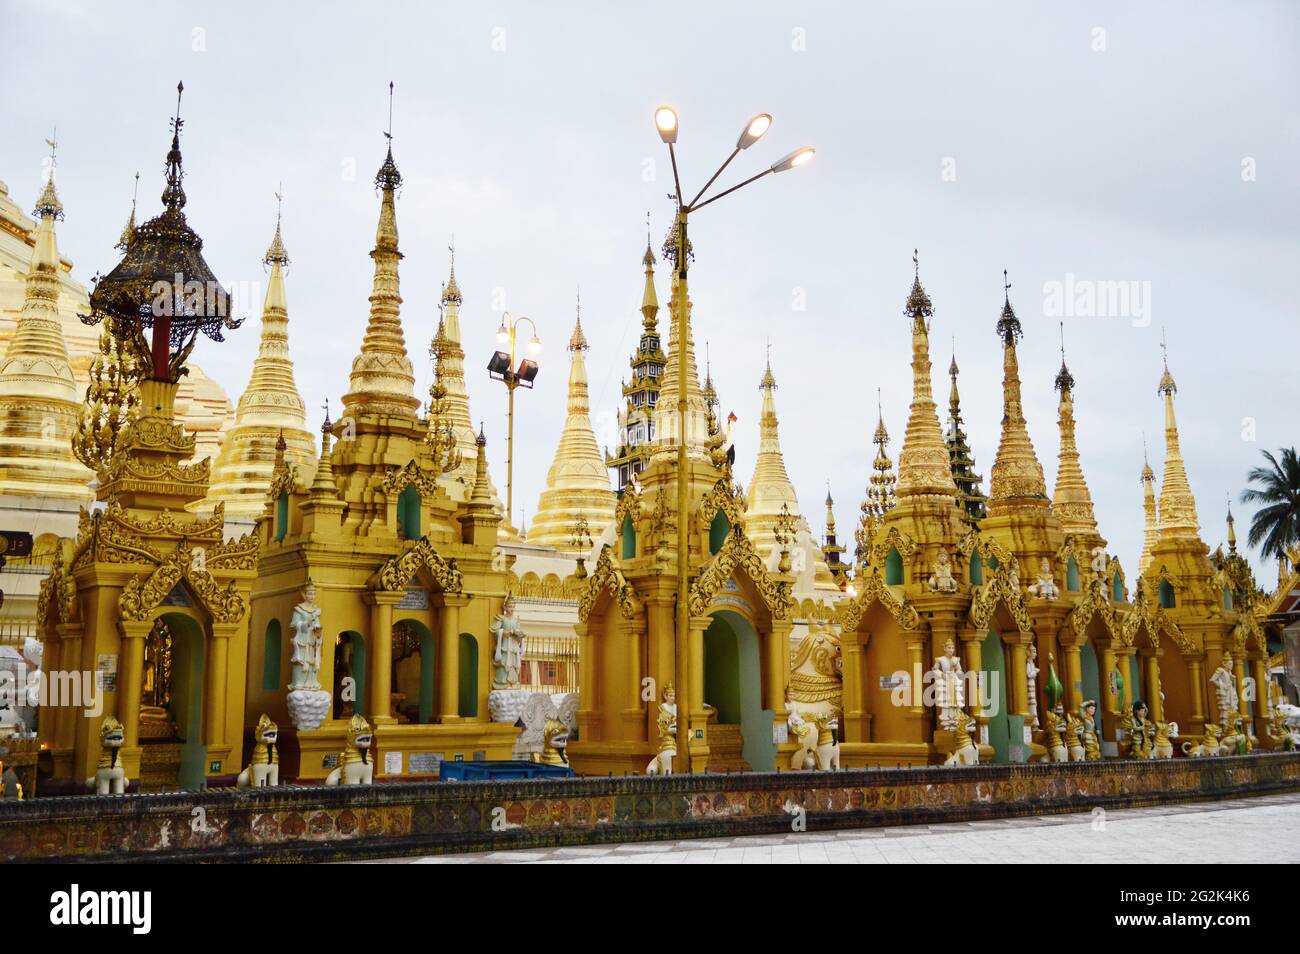 Small shrines line up around the complex of Shwedagon Pagoda in Yangon, Myanmar Stock Photo